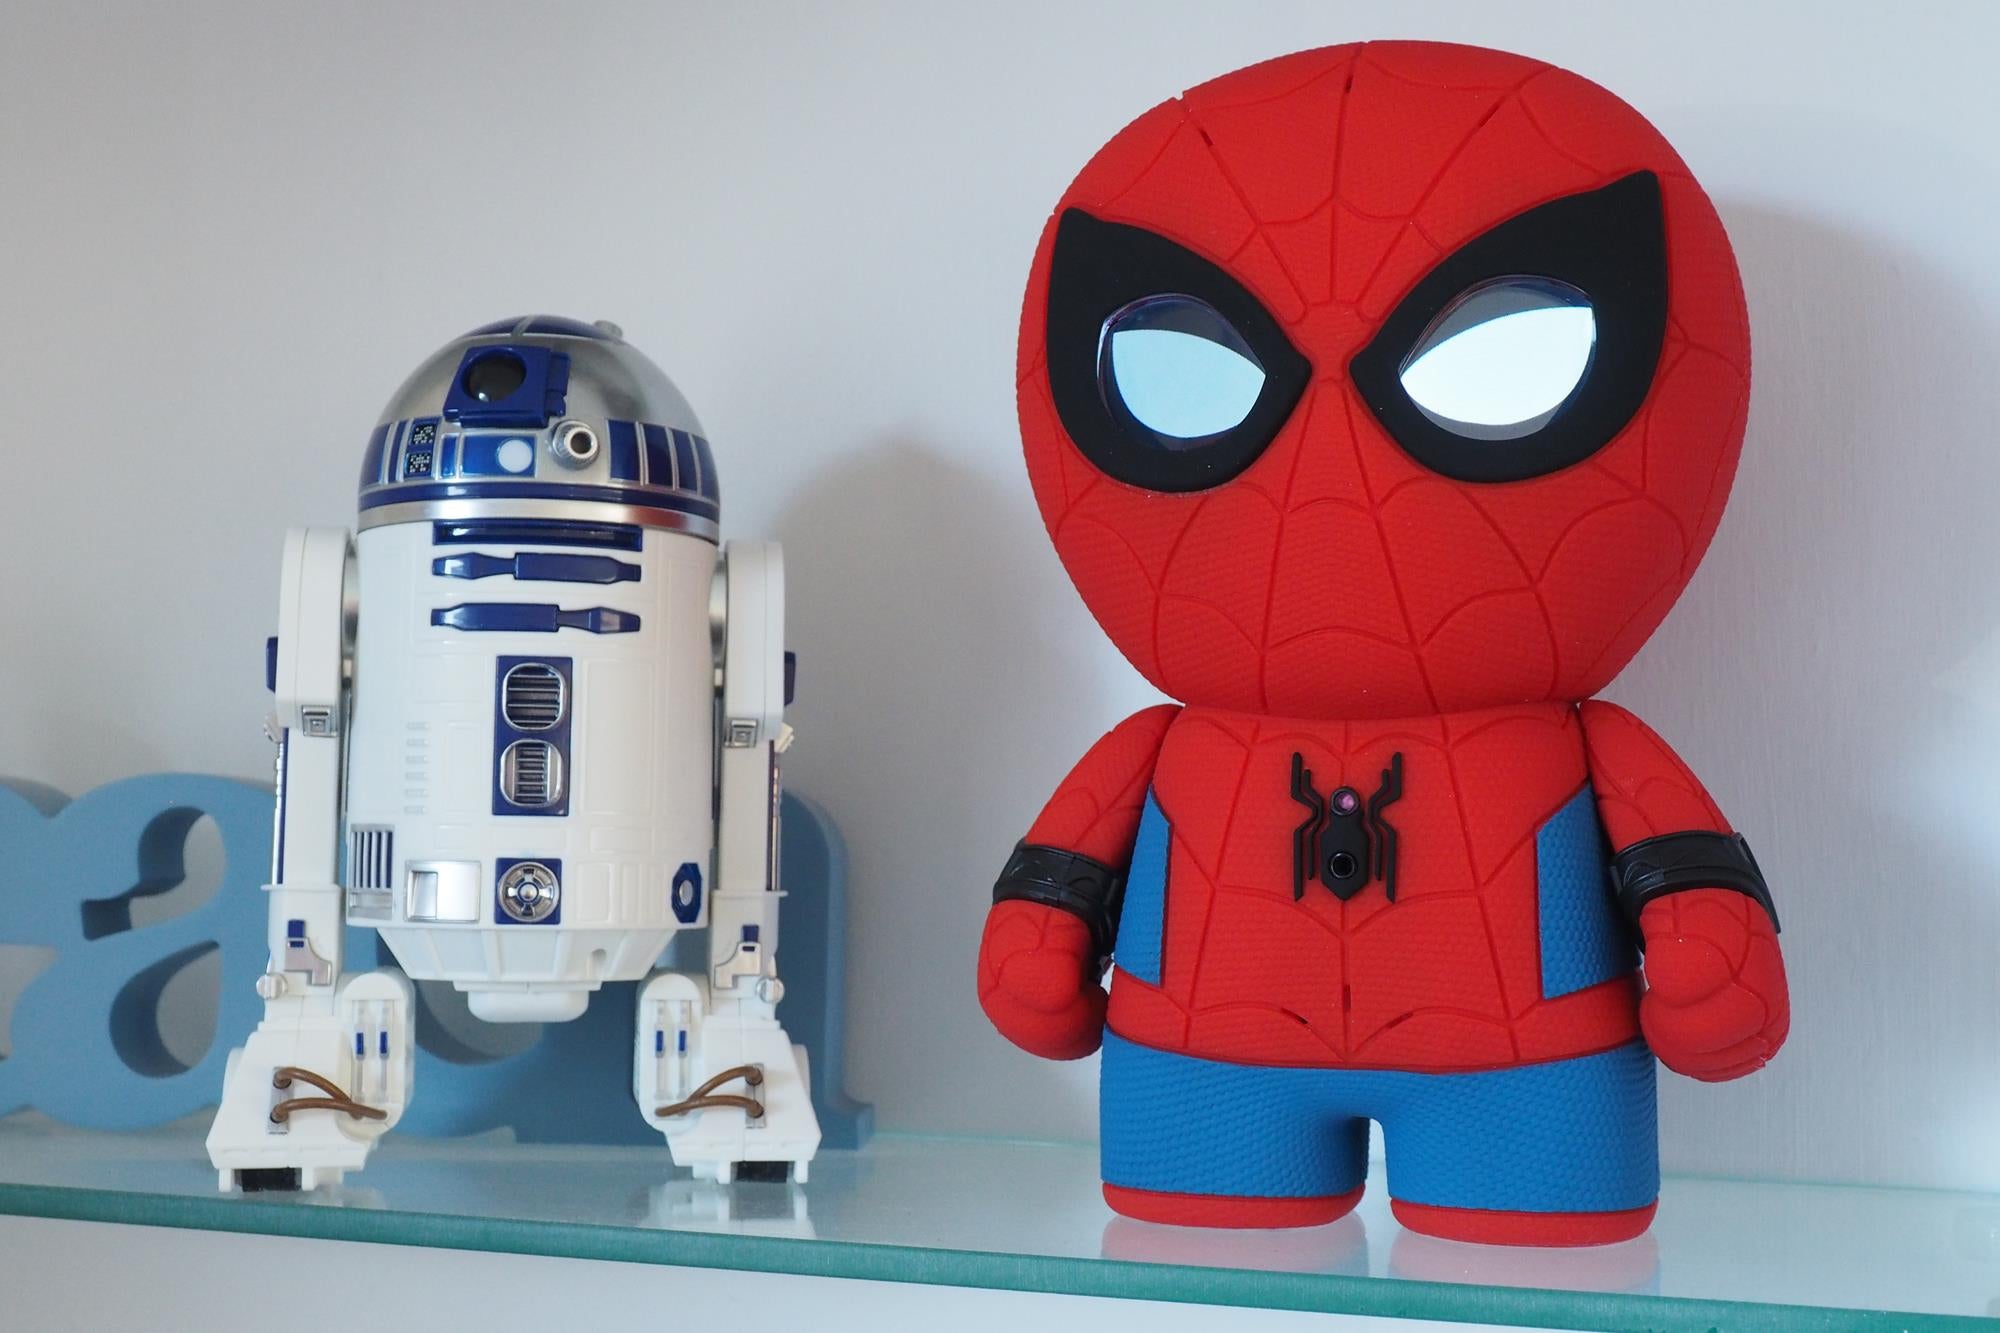 Sphero Spider-Man alongside R2-D2 toy on a shelf.